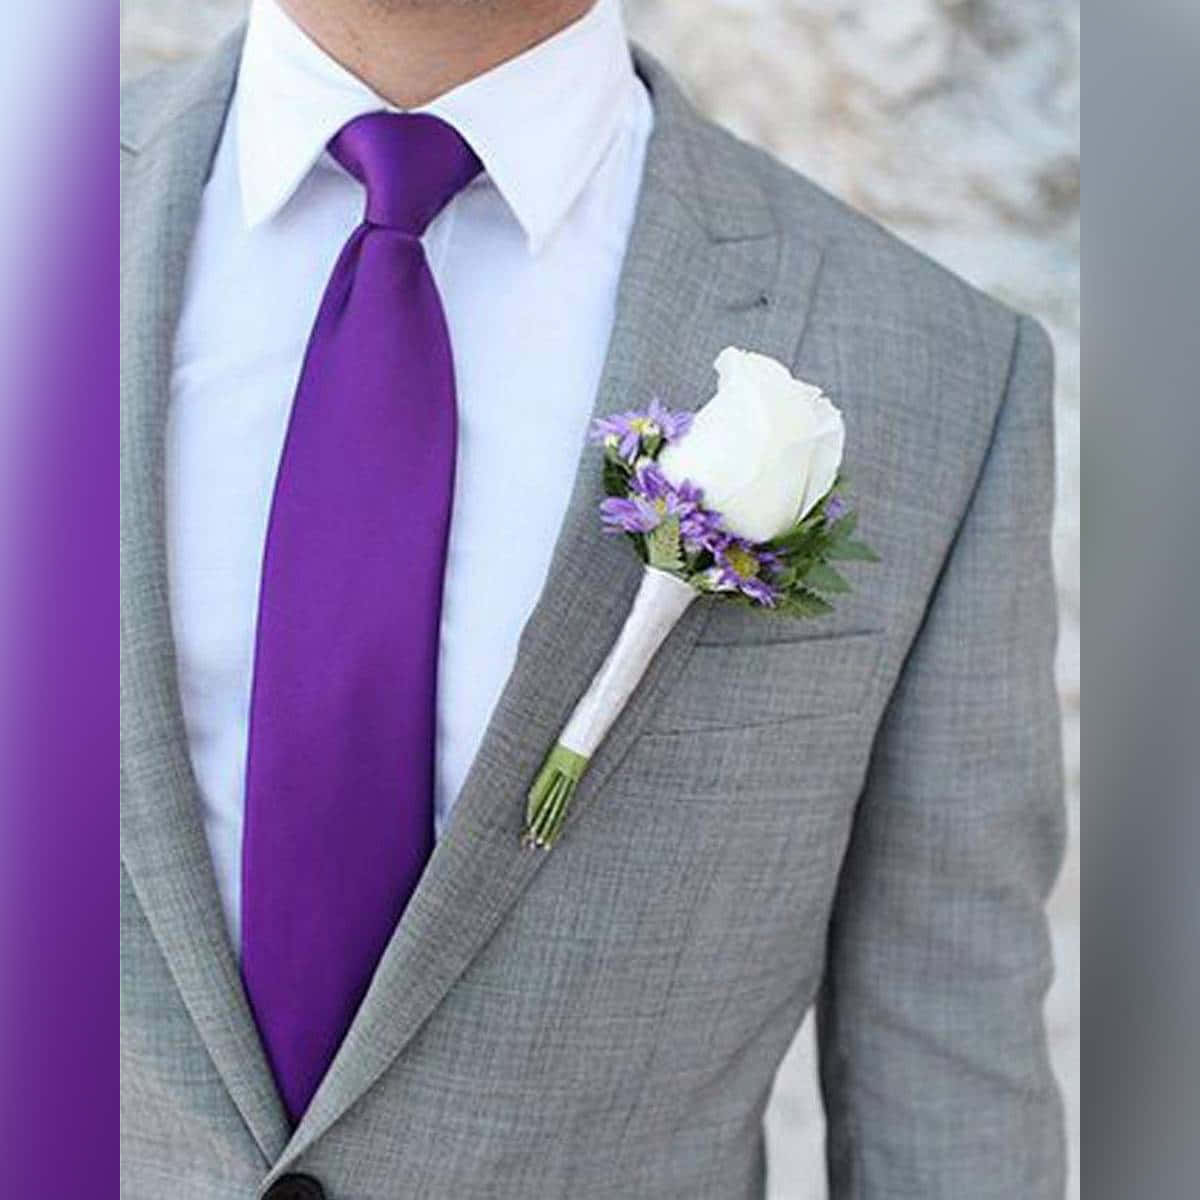 Purple Tie – Adding a dash of formal flair" Wallpaper